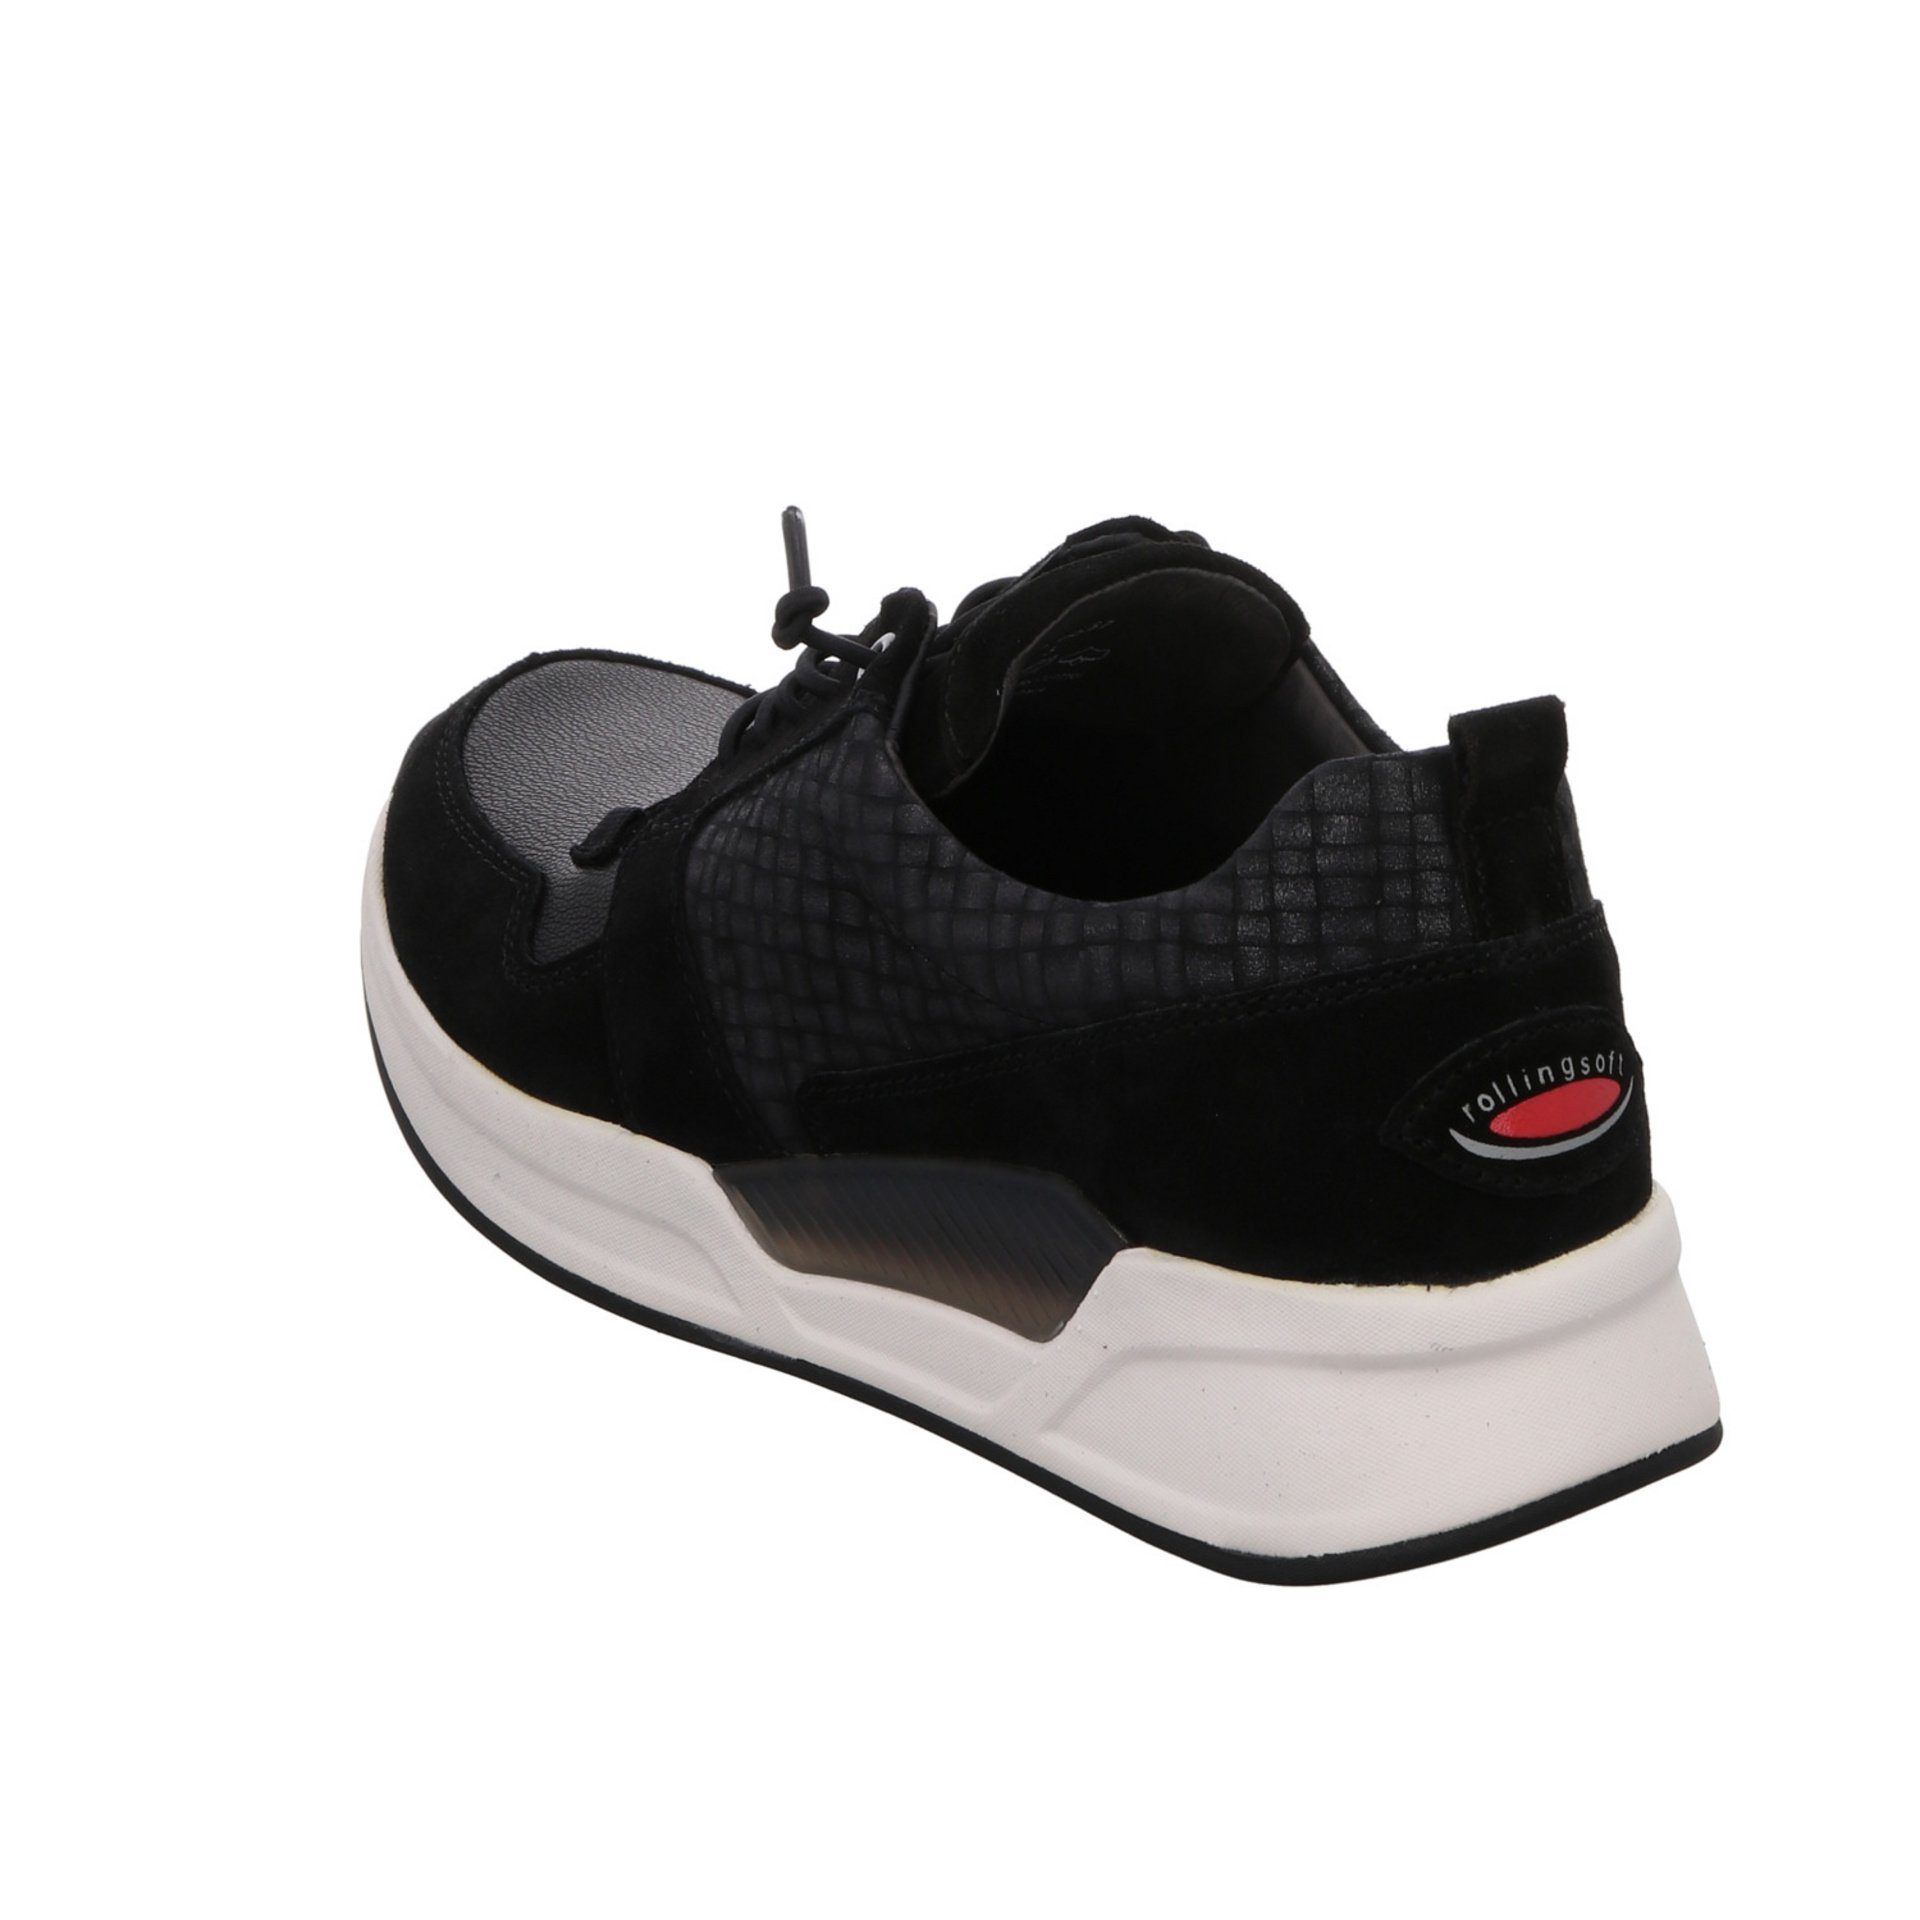 Sneaker Gabor Sneaker Rollingsoft Damen / Schnürschuh Lederkombination schwarz Schuhe 87